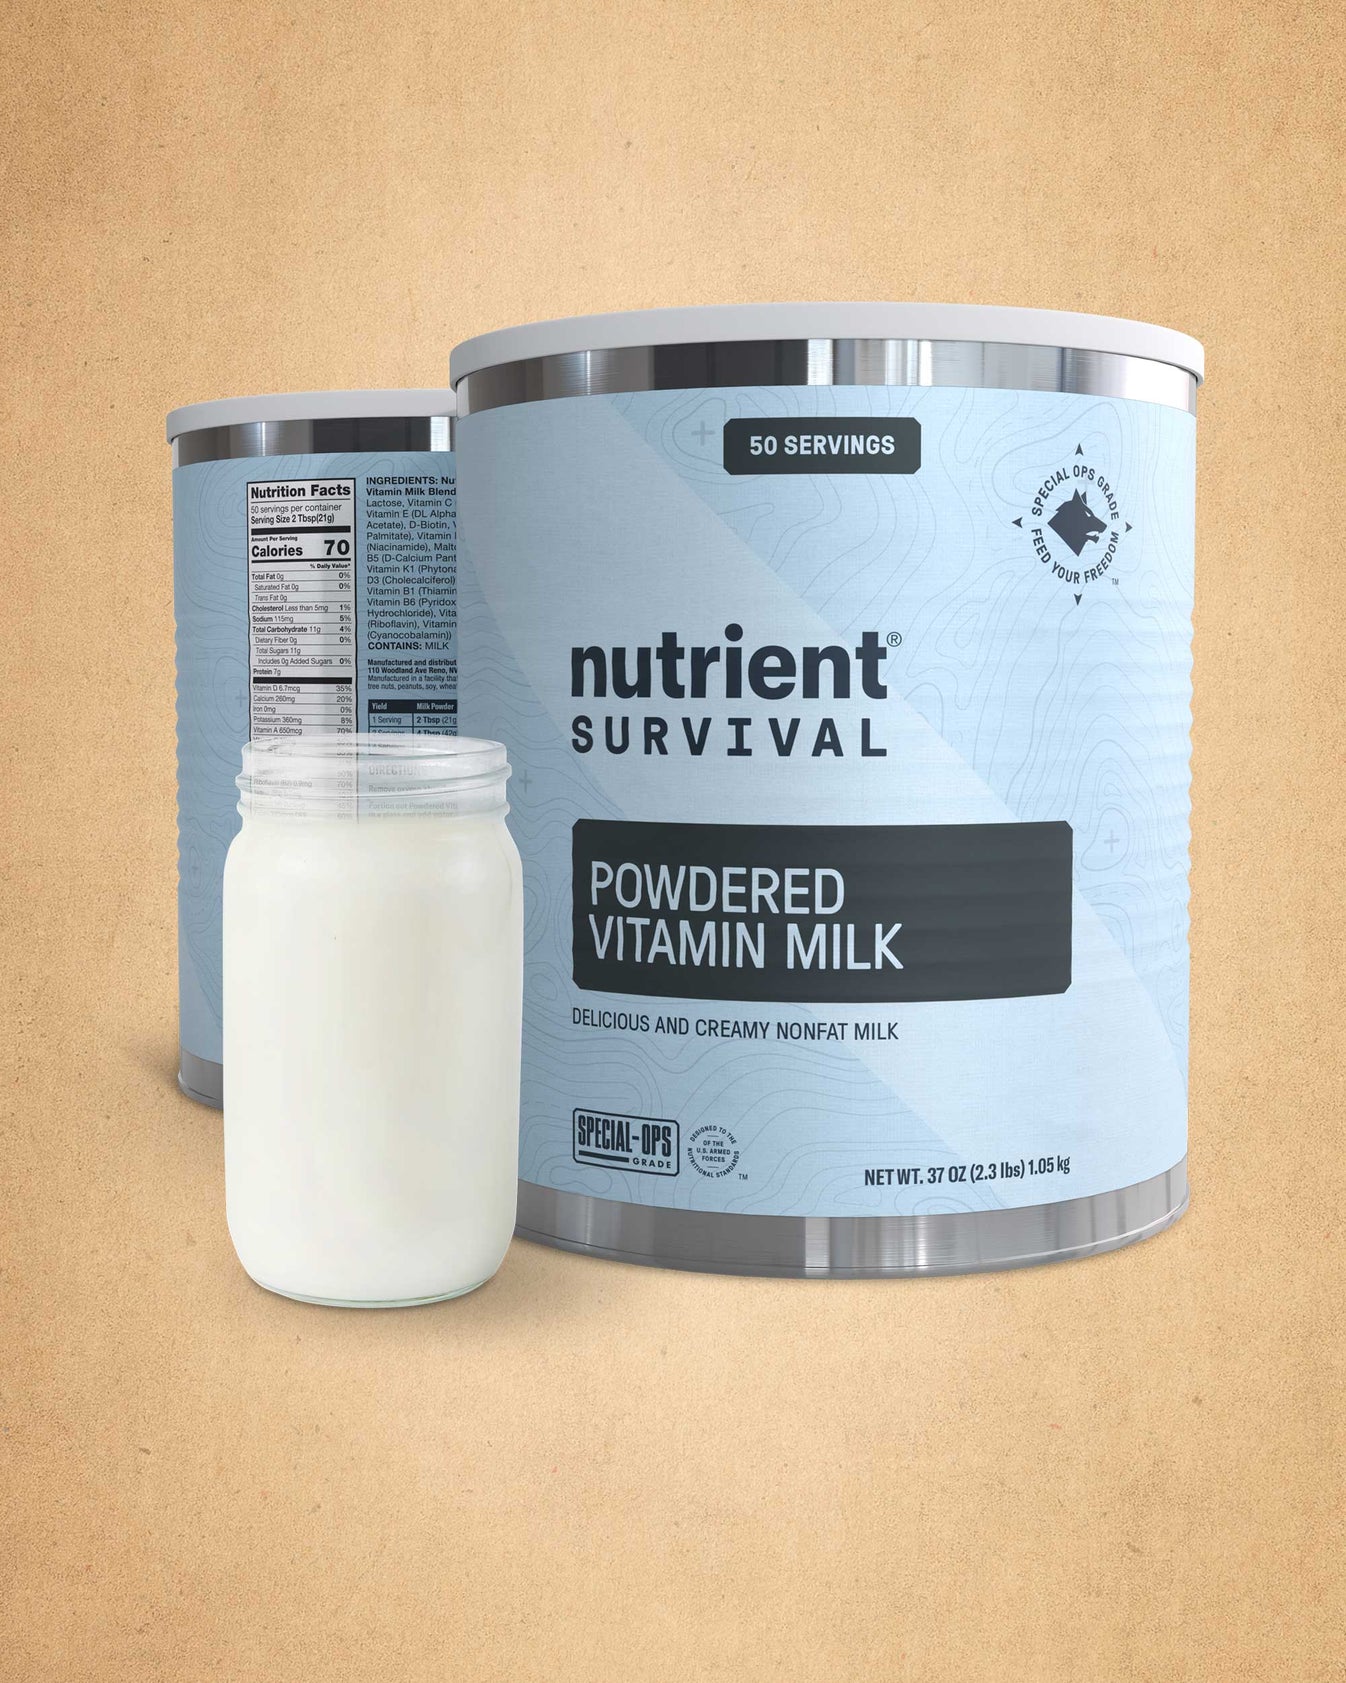 Powdered Vitamin Milk 6 Cans